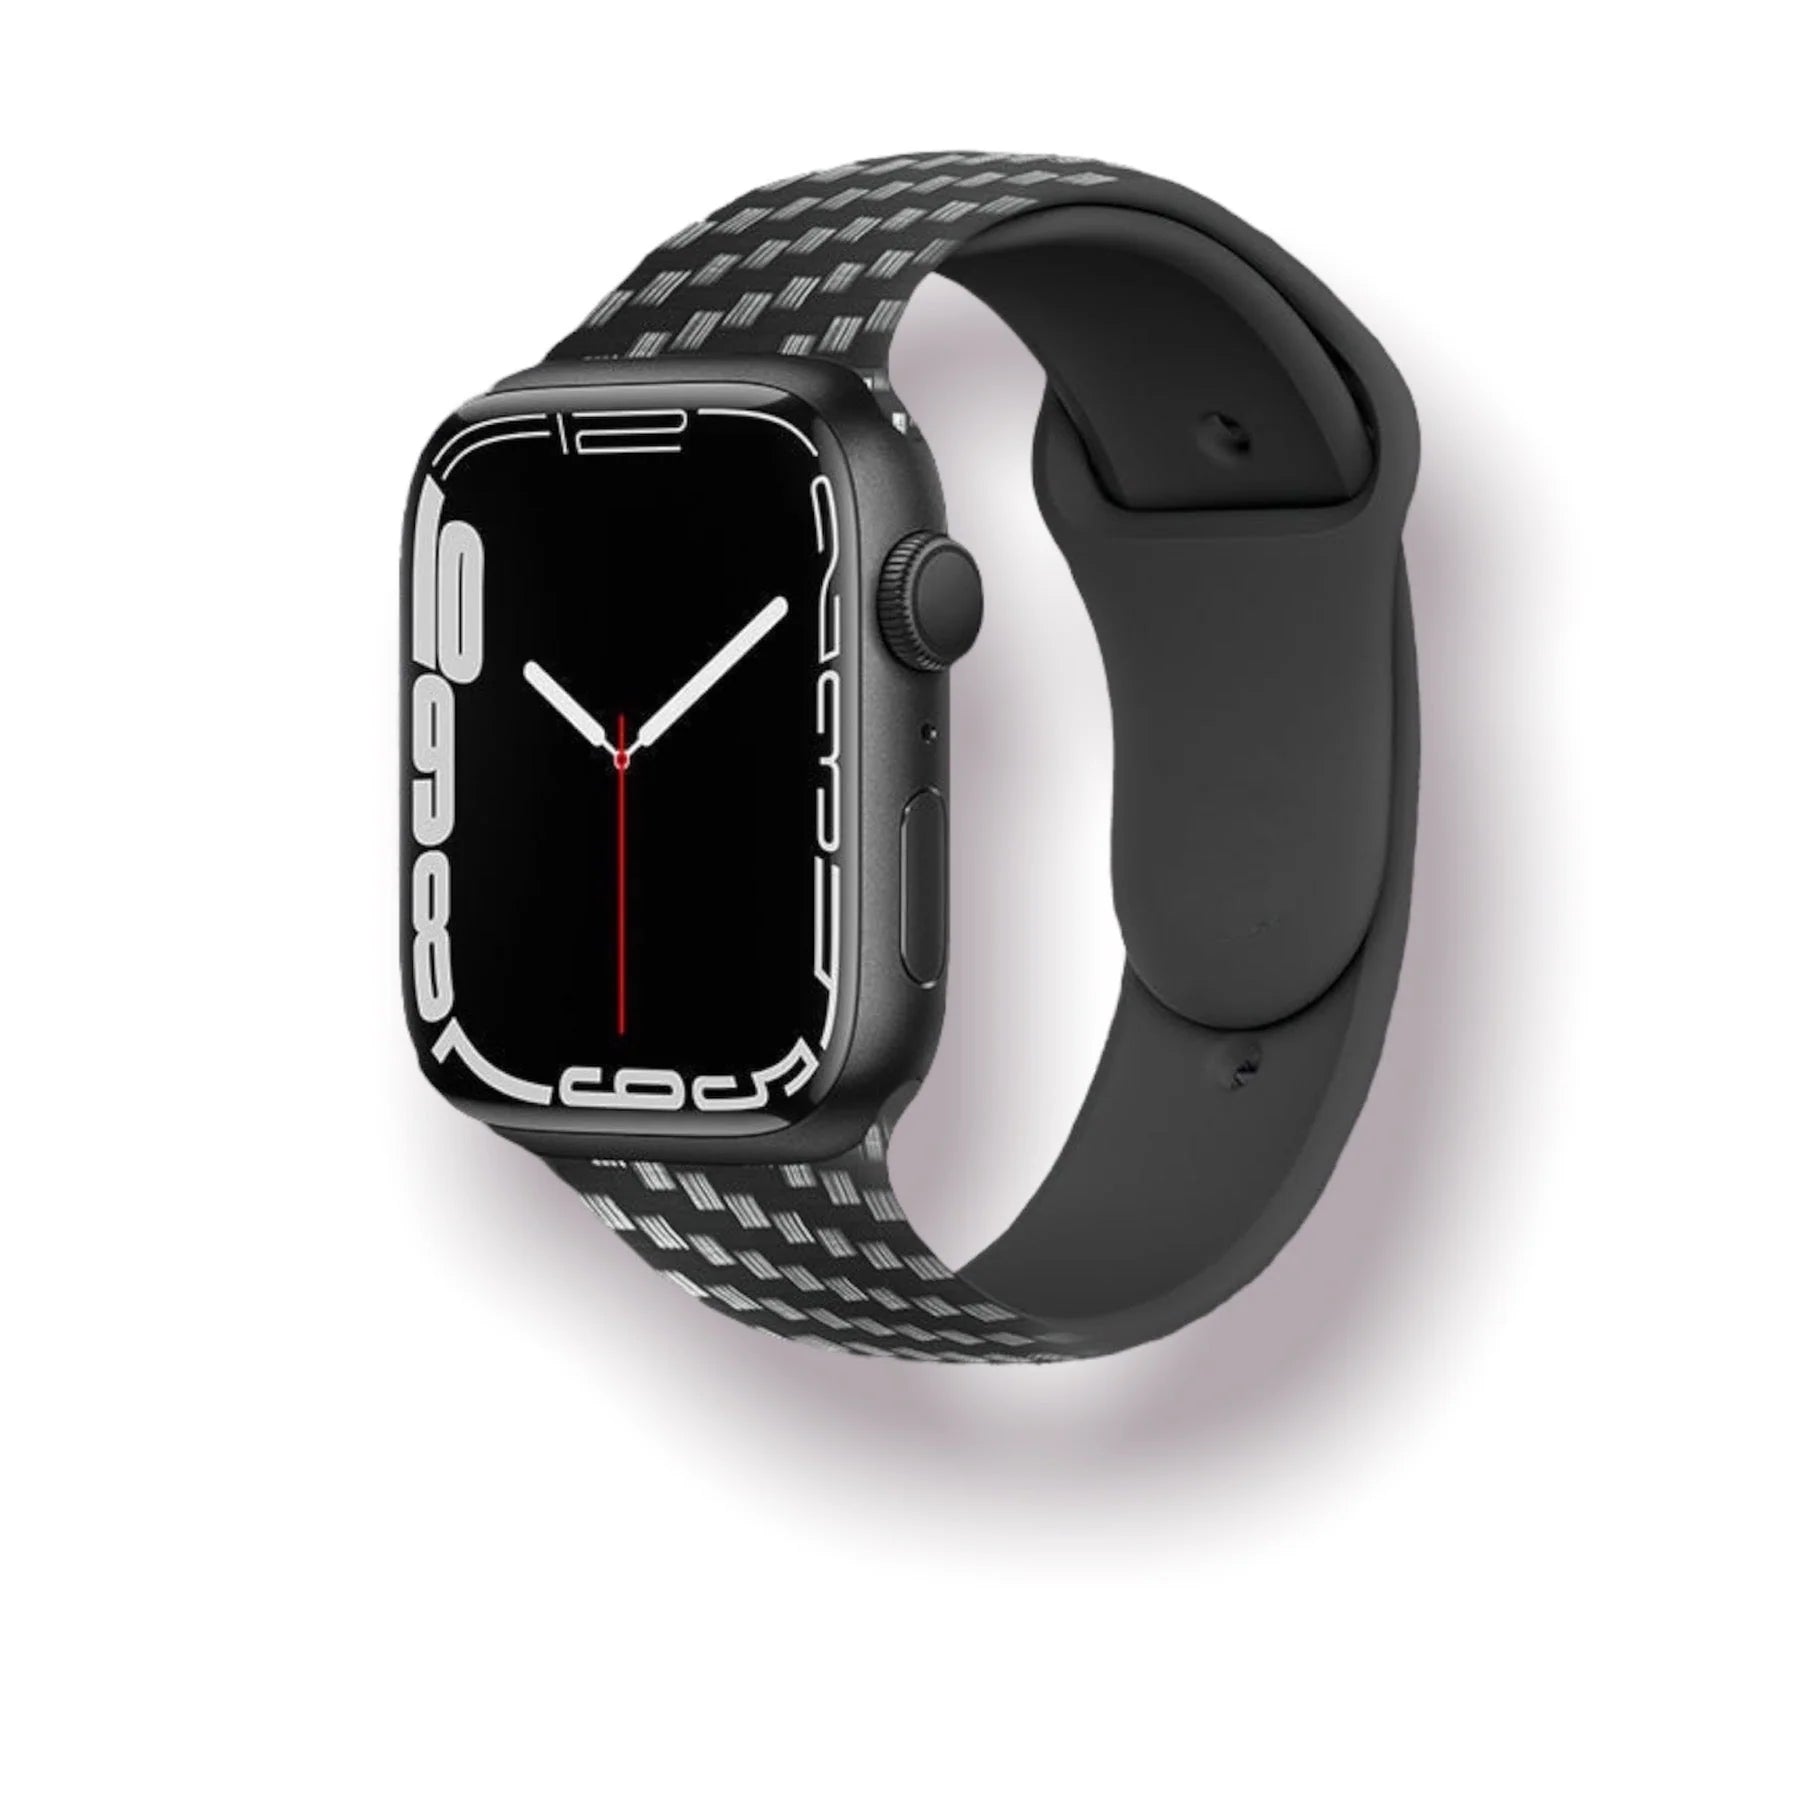 CARBON - Carbon Apple Watch Band